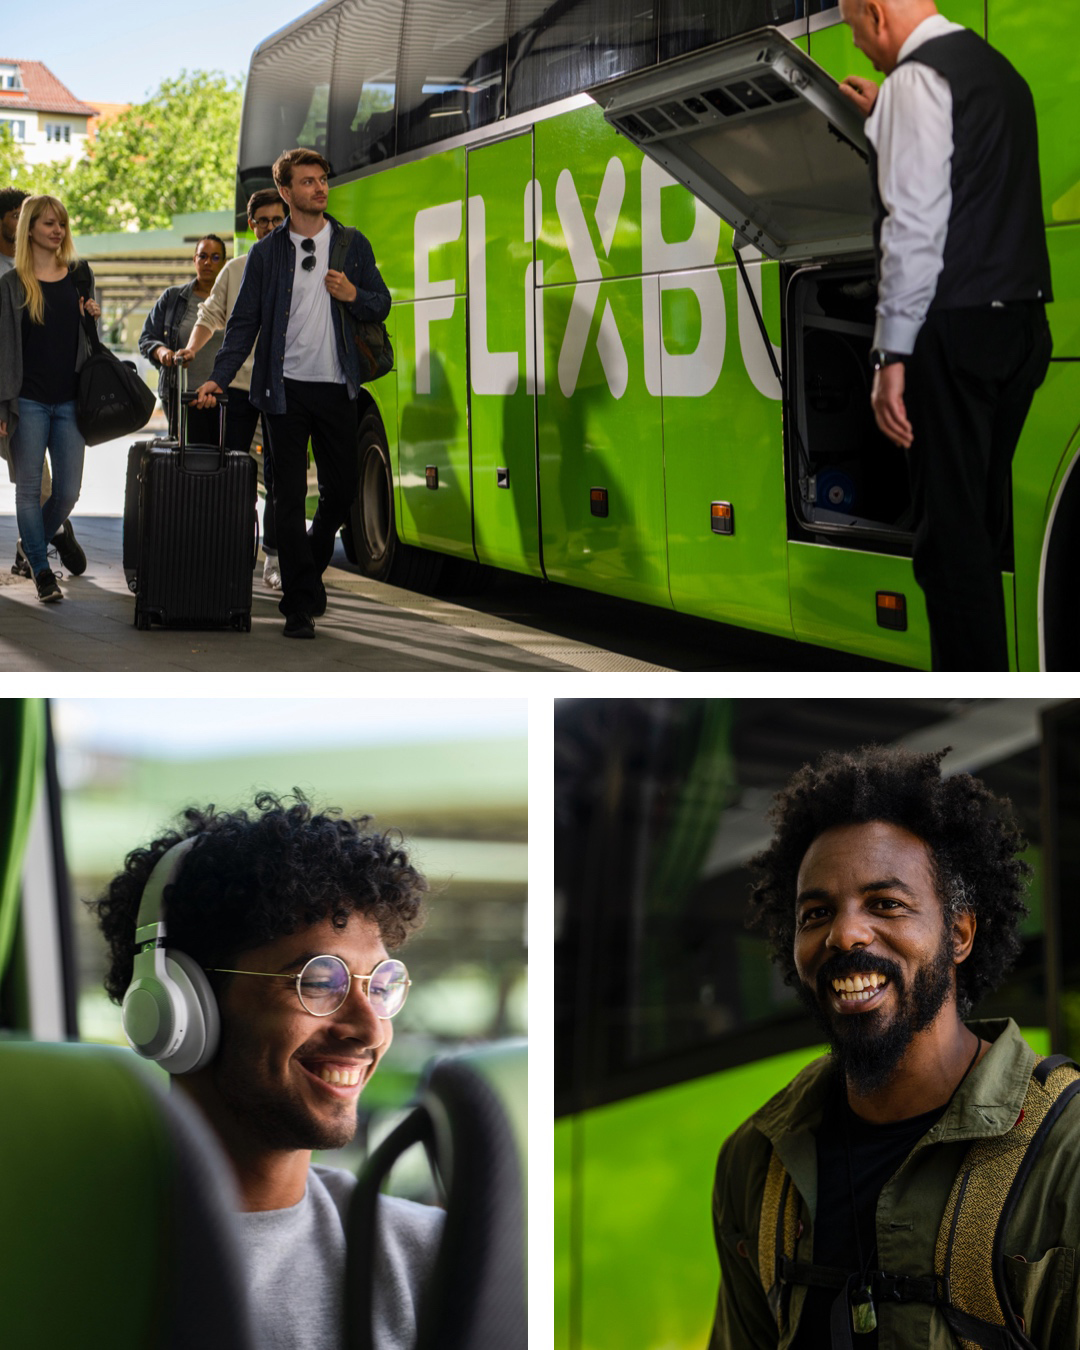 Flixbuskampagne – Client: Flixbus Fotografie: Martin Förster Maske: Uta Stabler